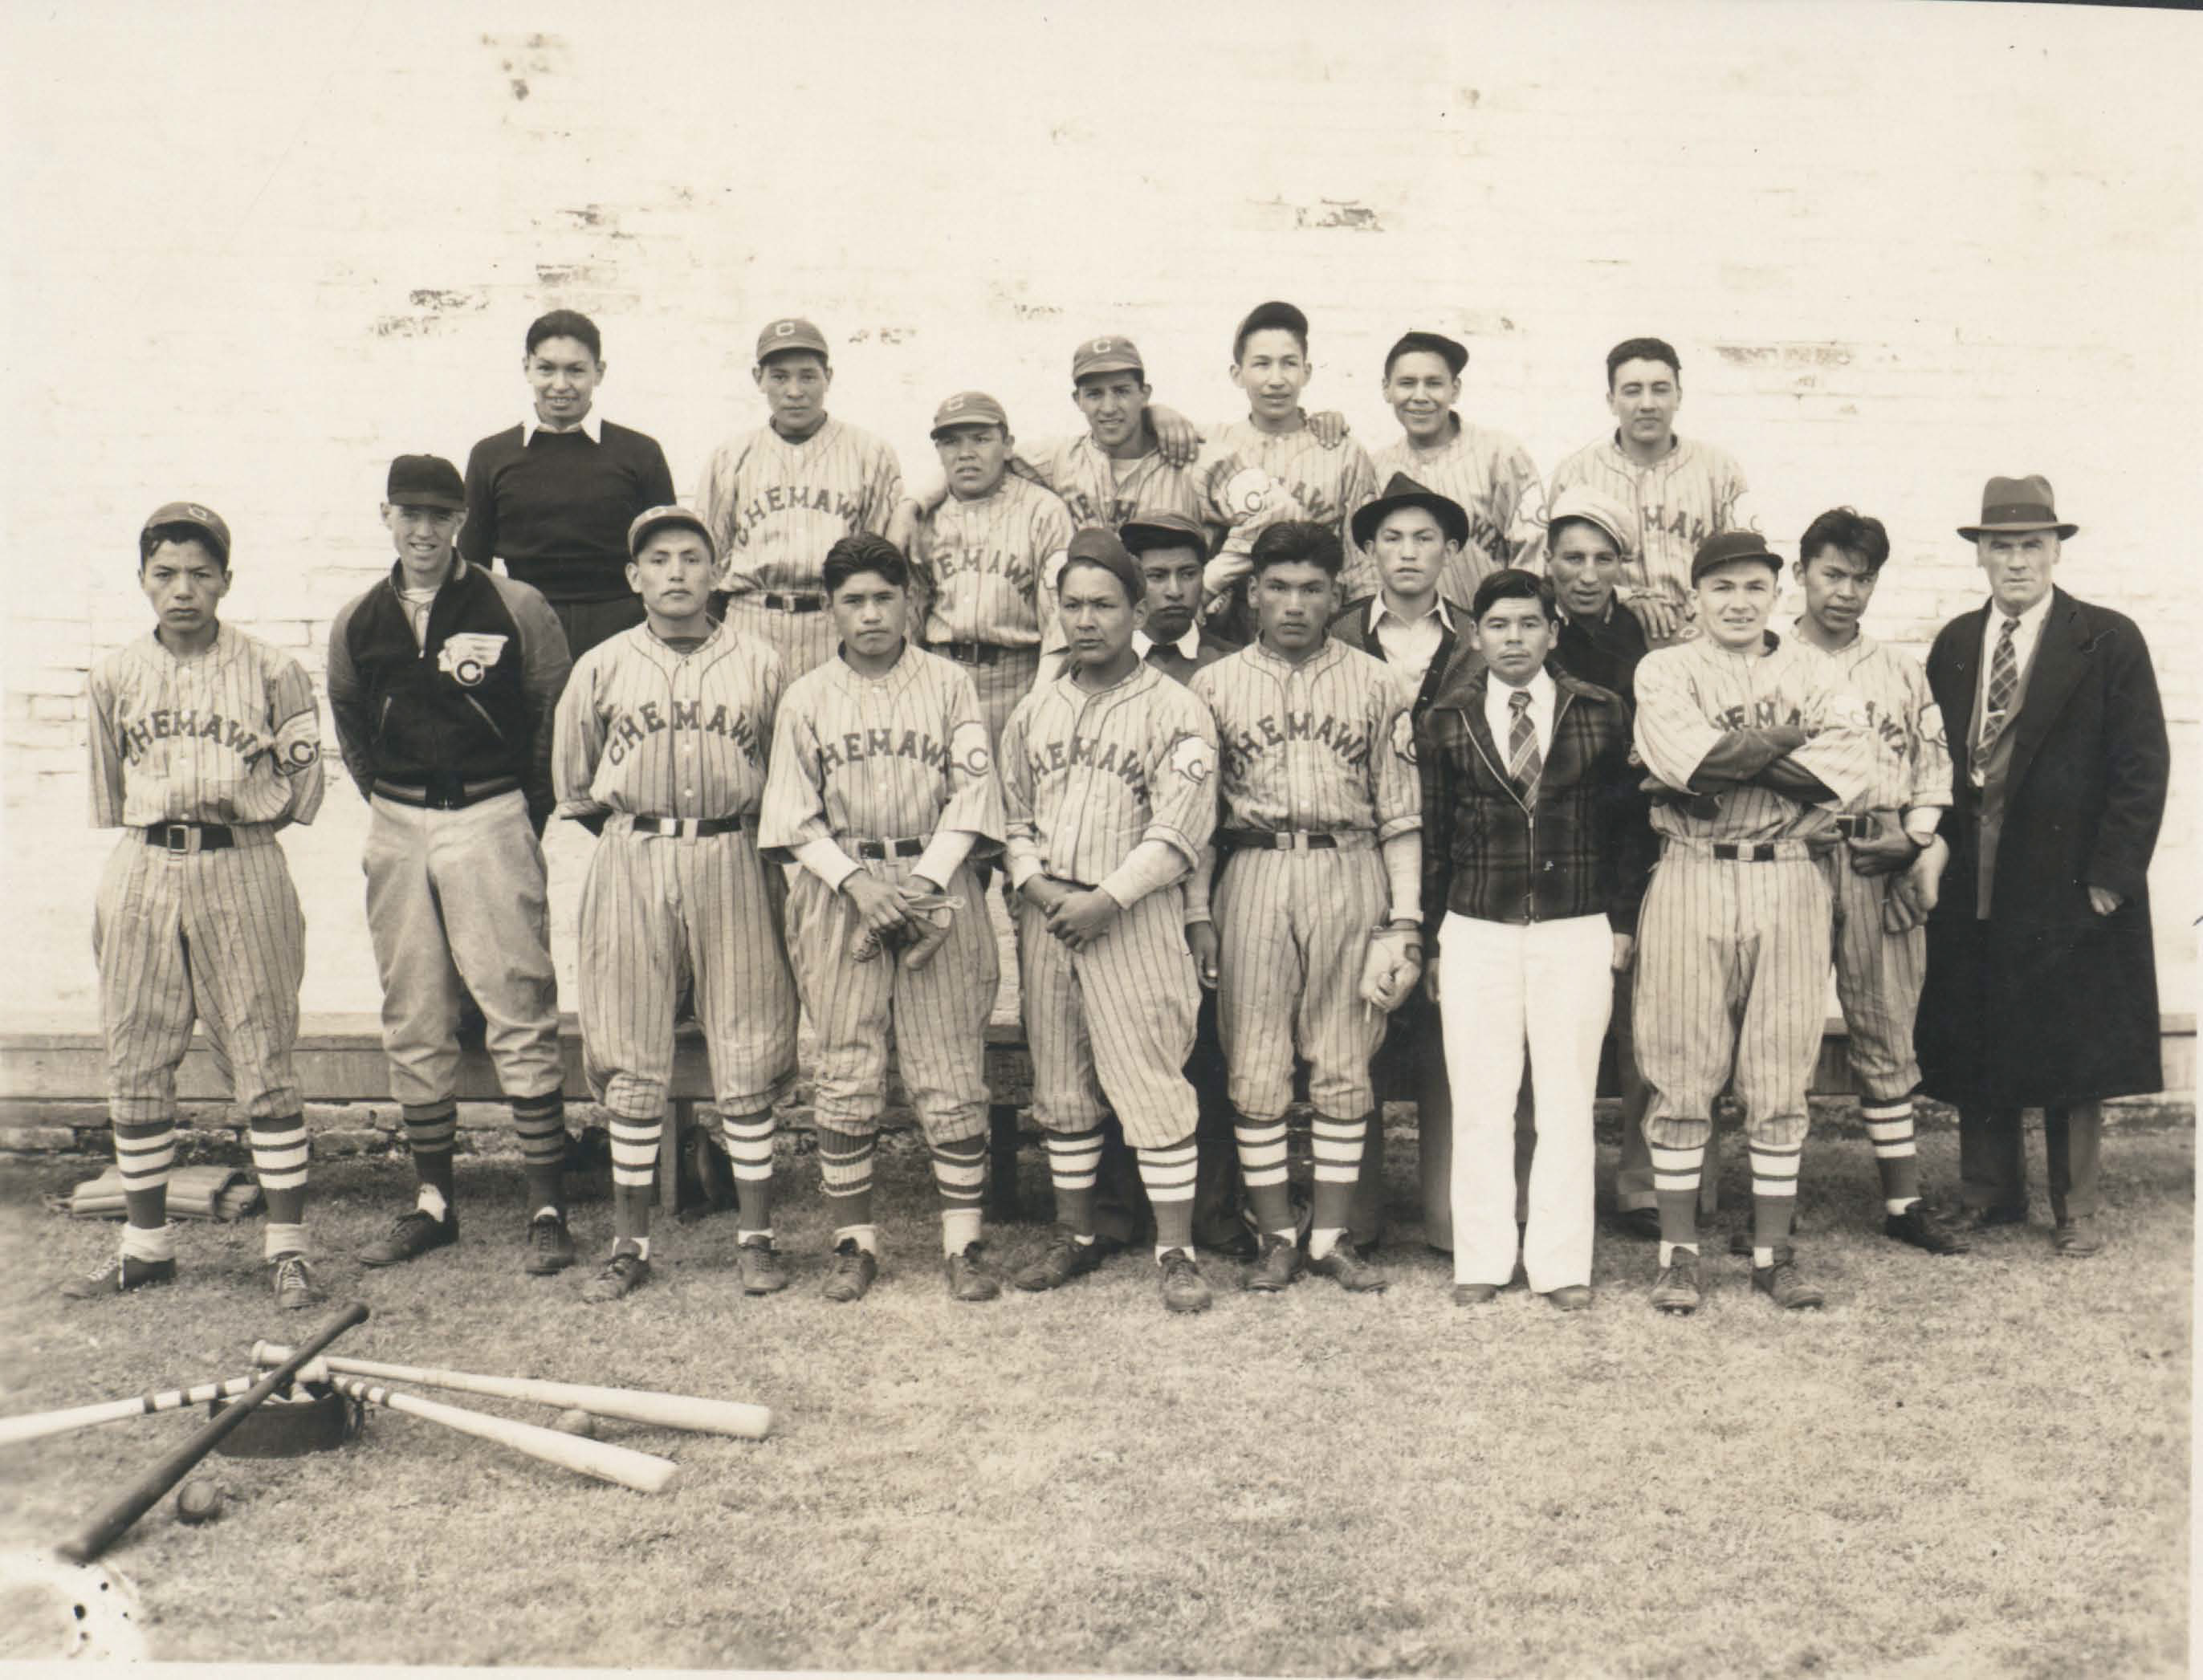 Chemawa Indian School Baseball Team, 1939